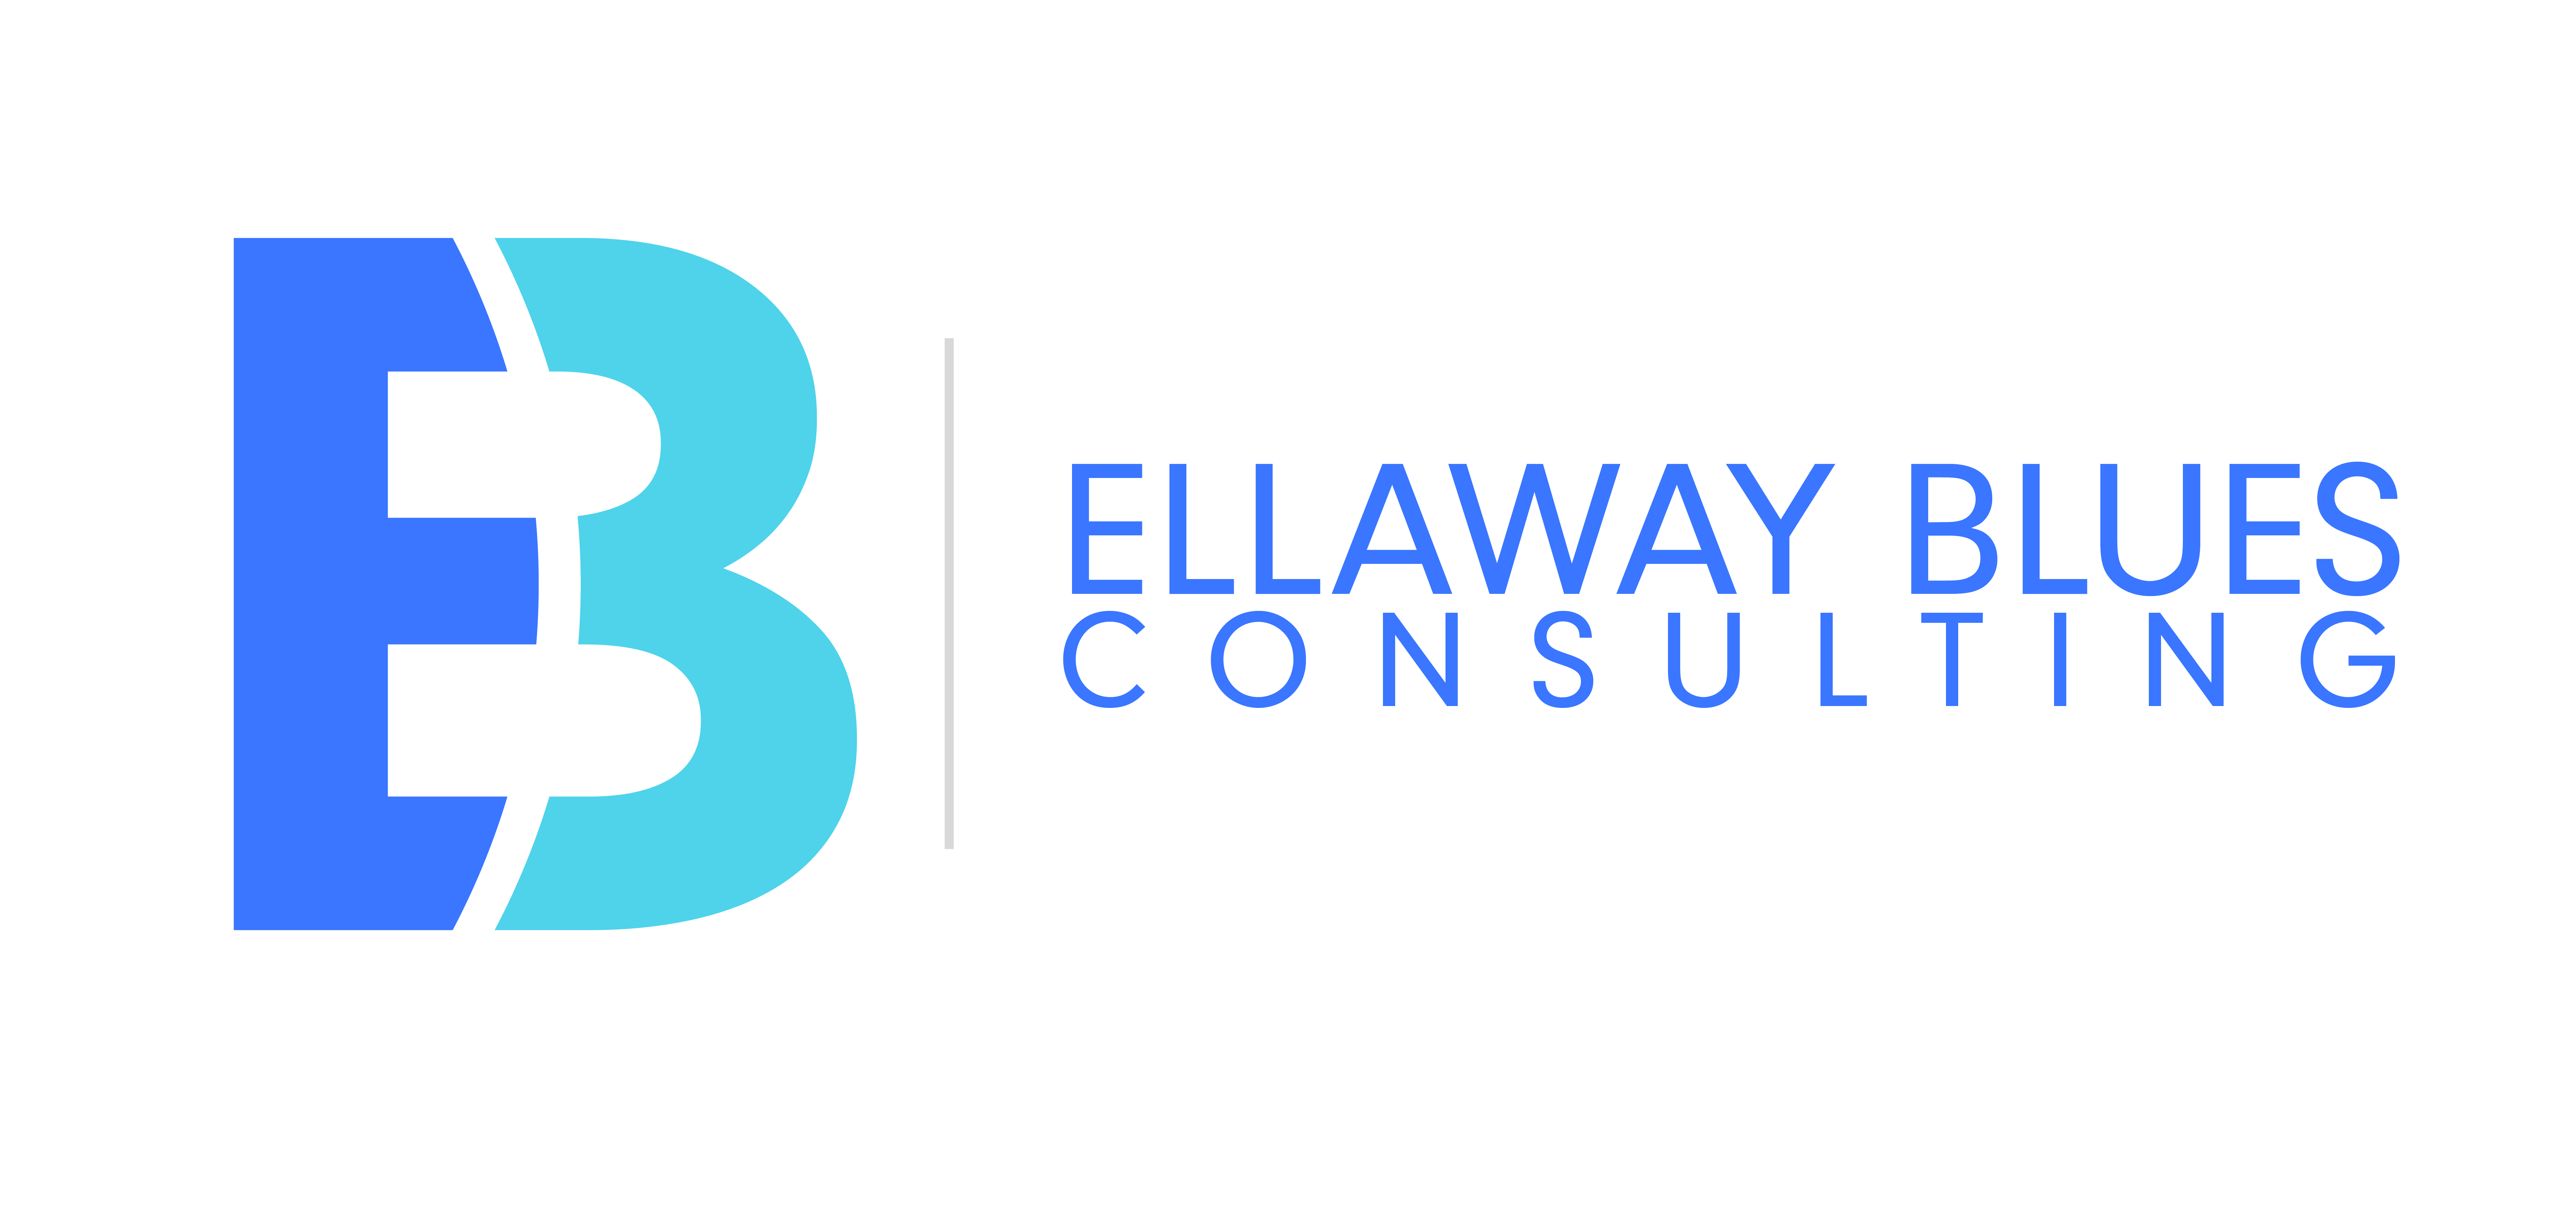 Ellaway Blues Consulting